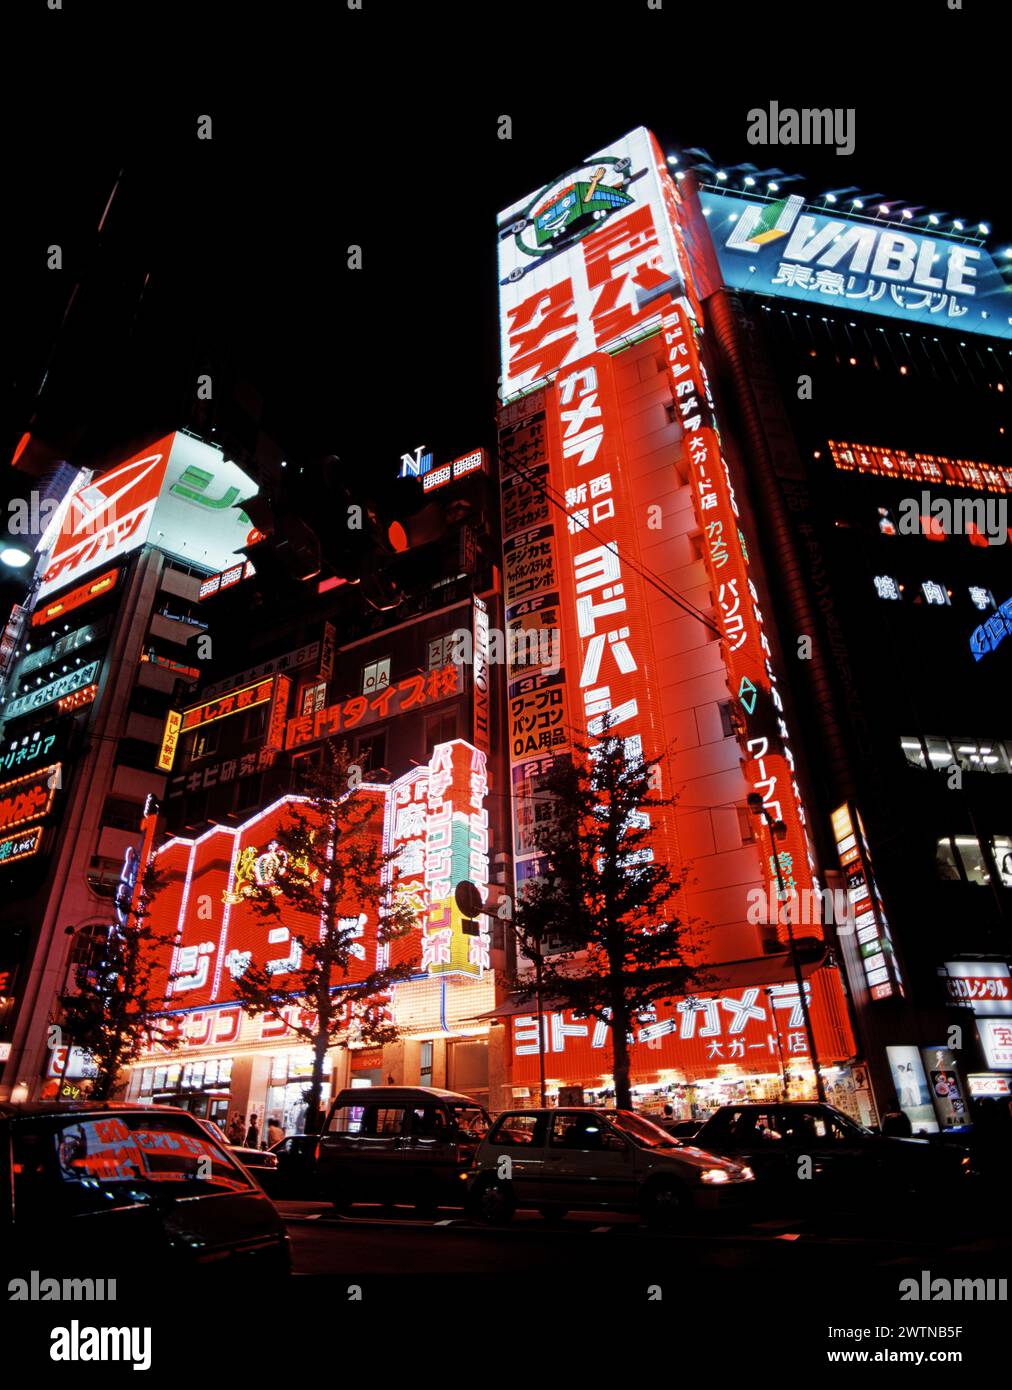 Japan. Tokyo. Shinjuku district. Busy street scene with bright lights & traffic at night. Stock Photo